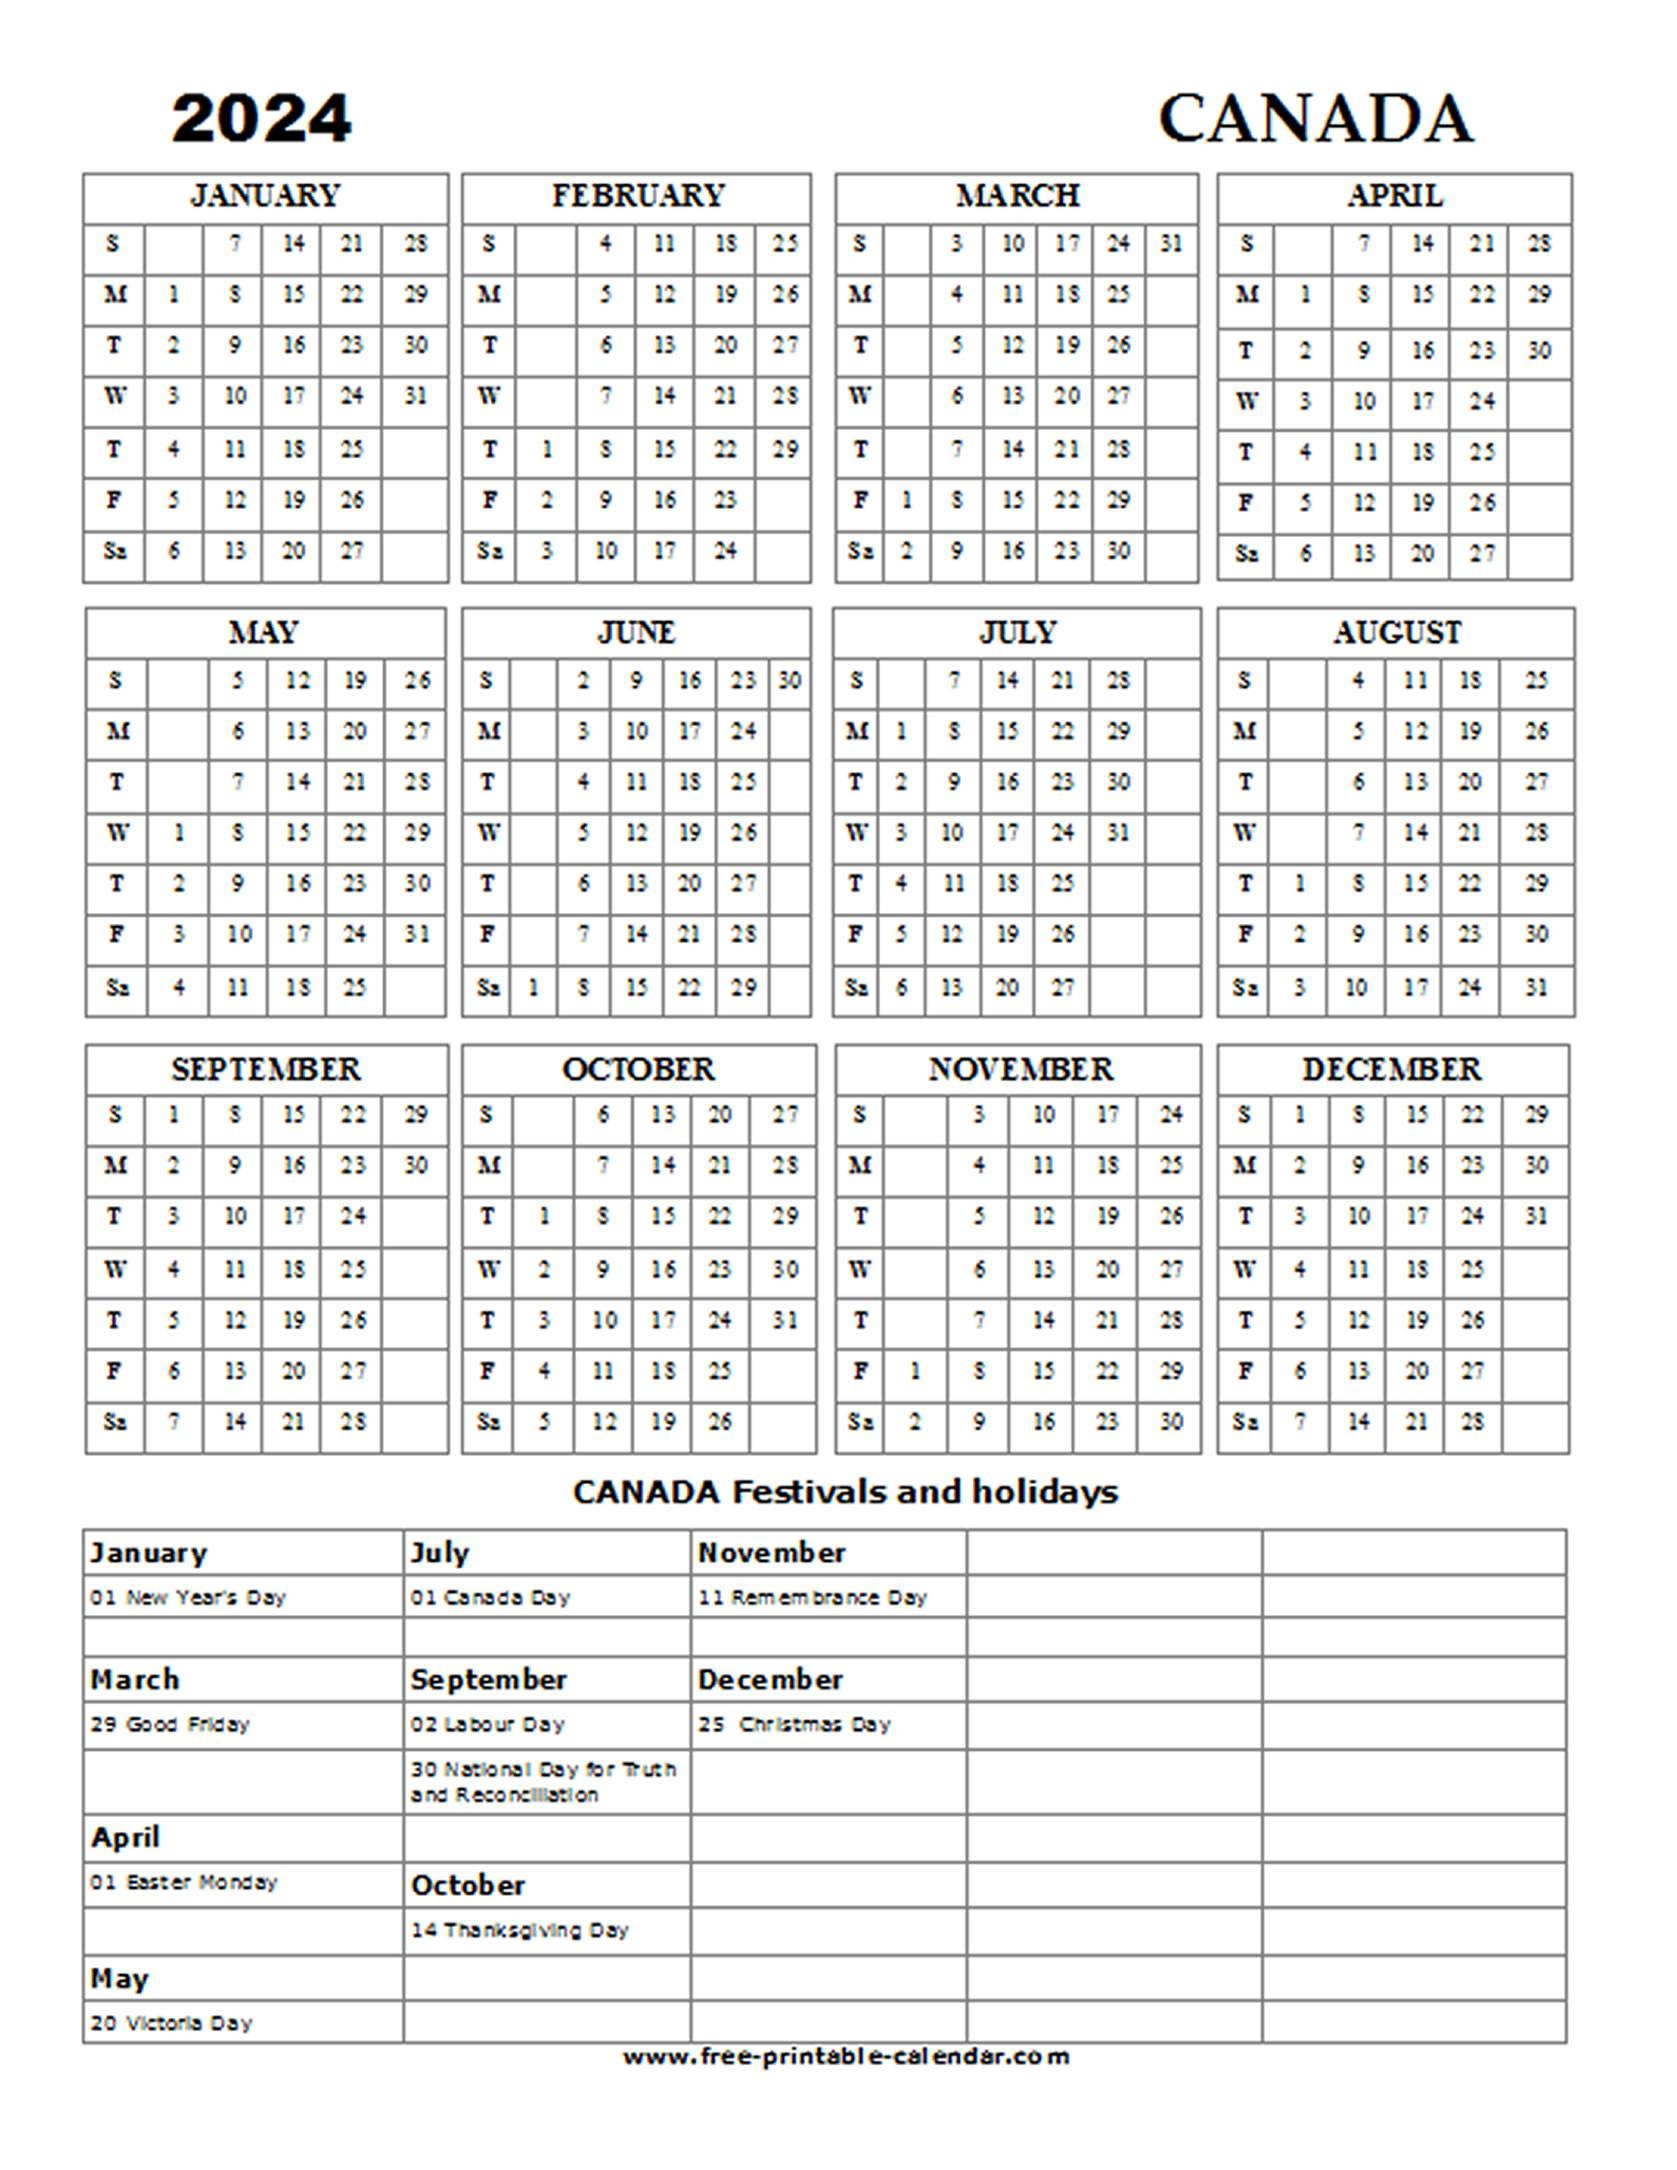 2024 Canada Holiday Calendar - Free-Printable-Calendar | Free Printable Calendar 2024 Canada With Holidays